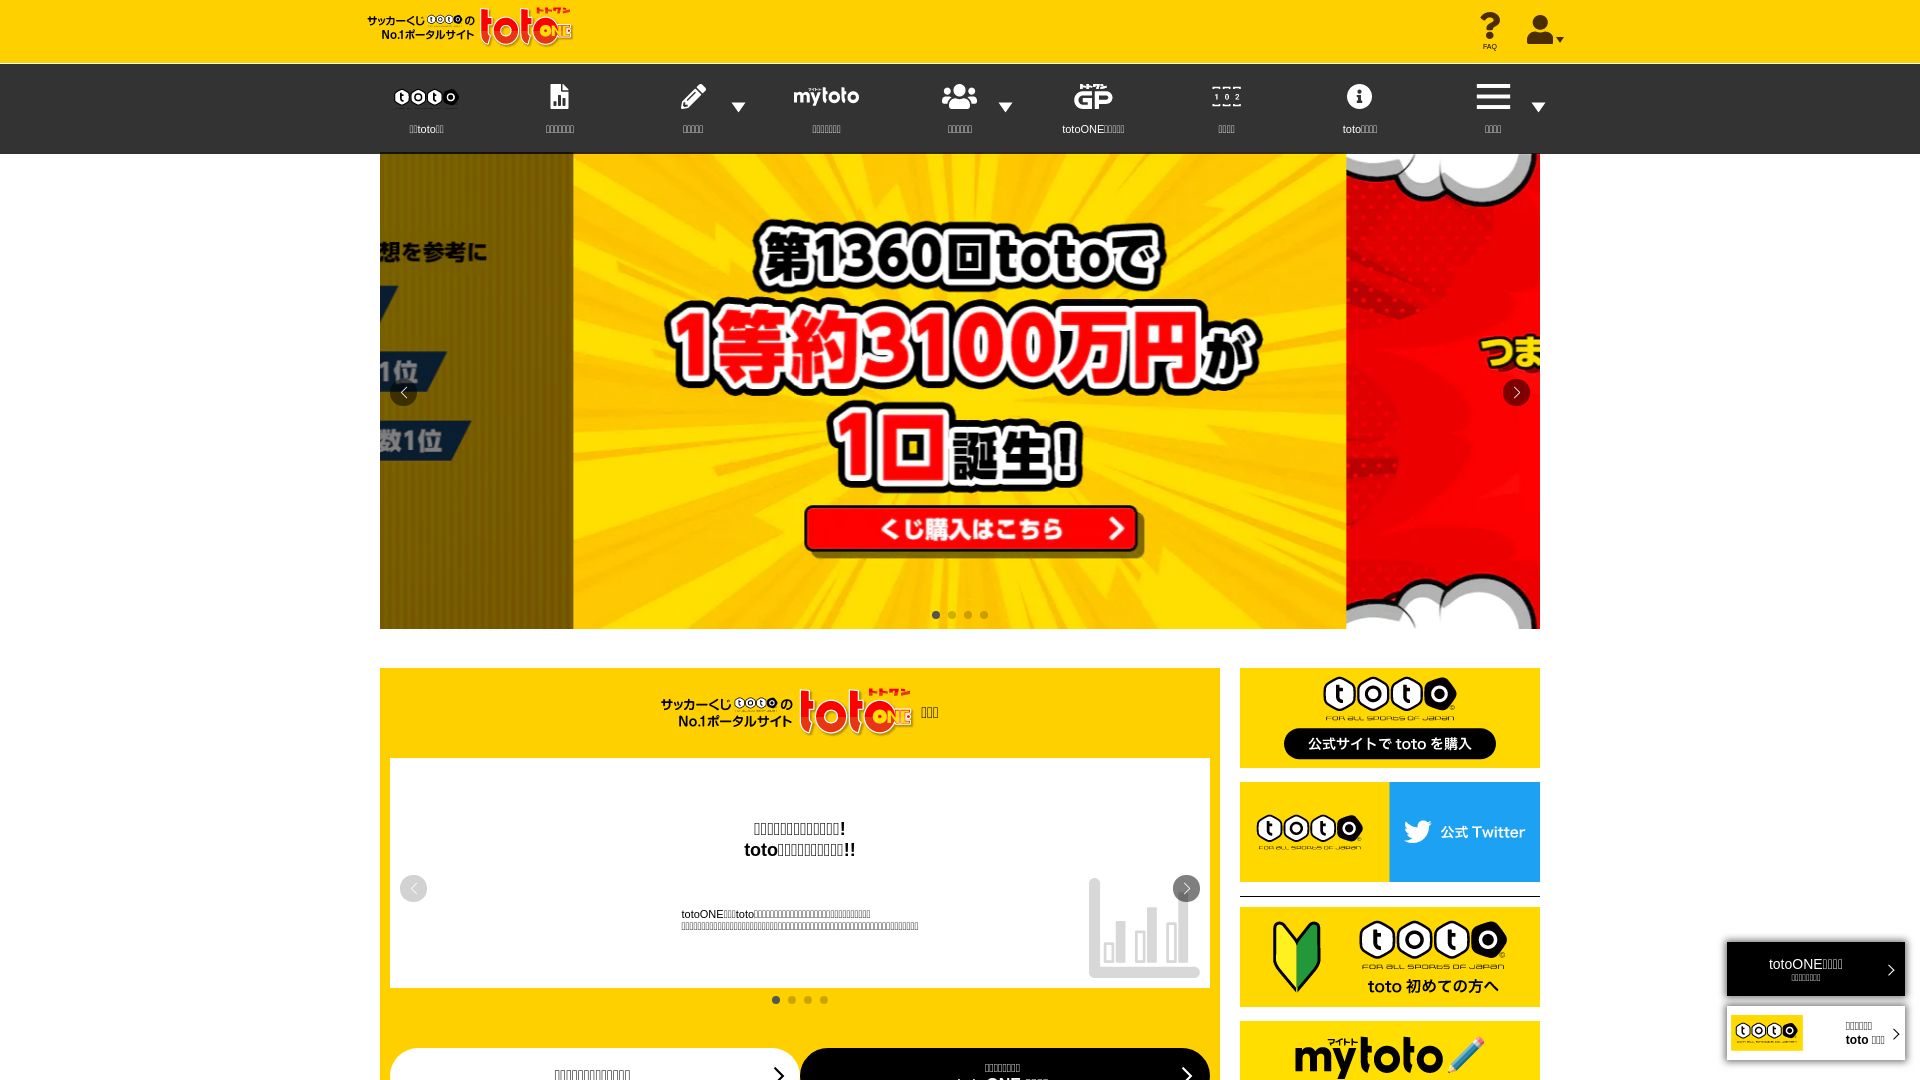 Website status totoone.jp is   ONLINE